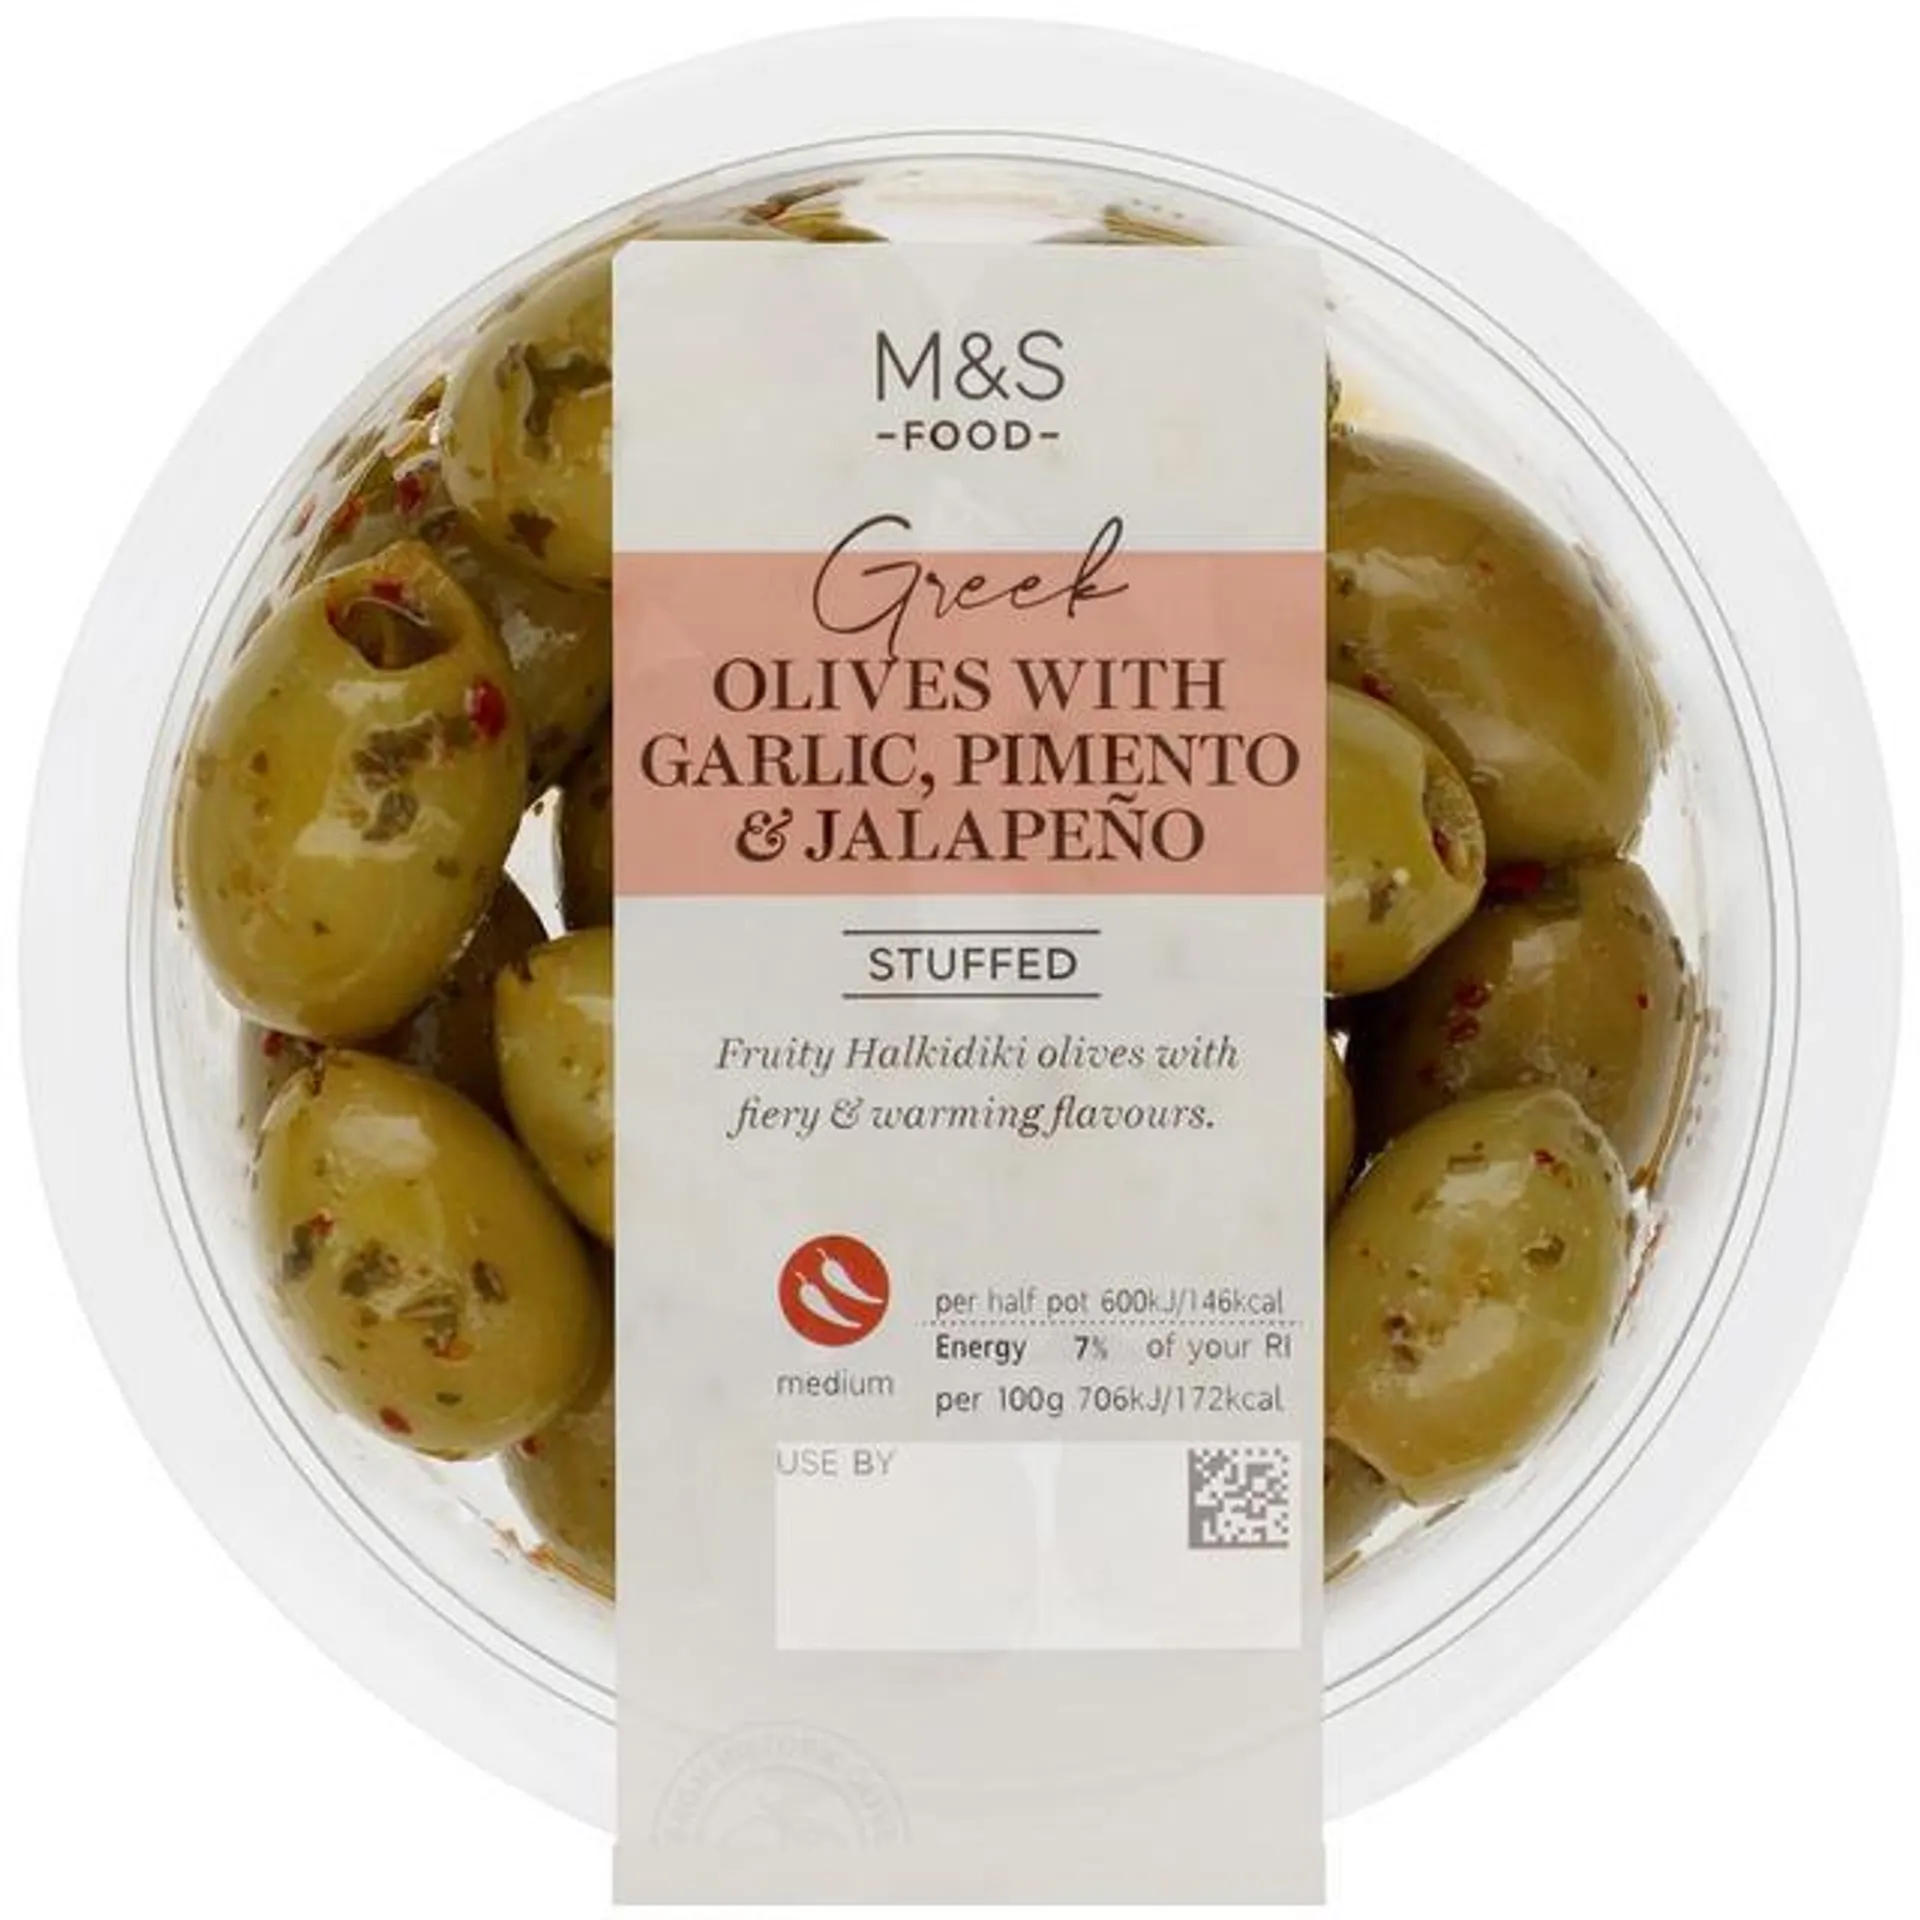 M&S Olives with Garlic, Pimento & Jalapeno